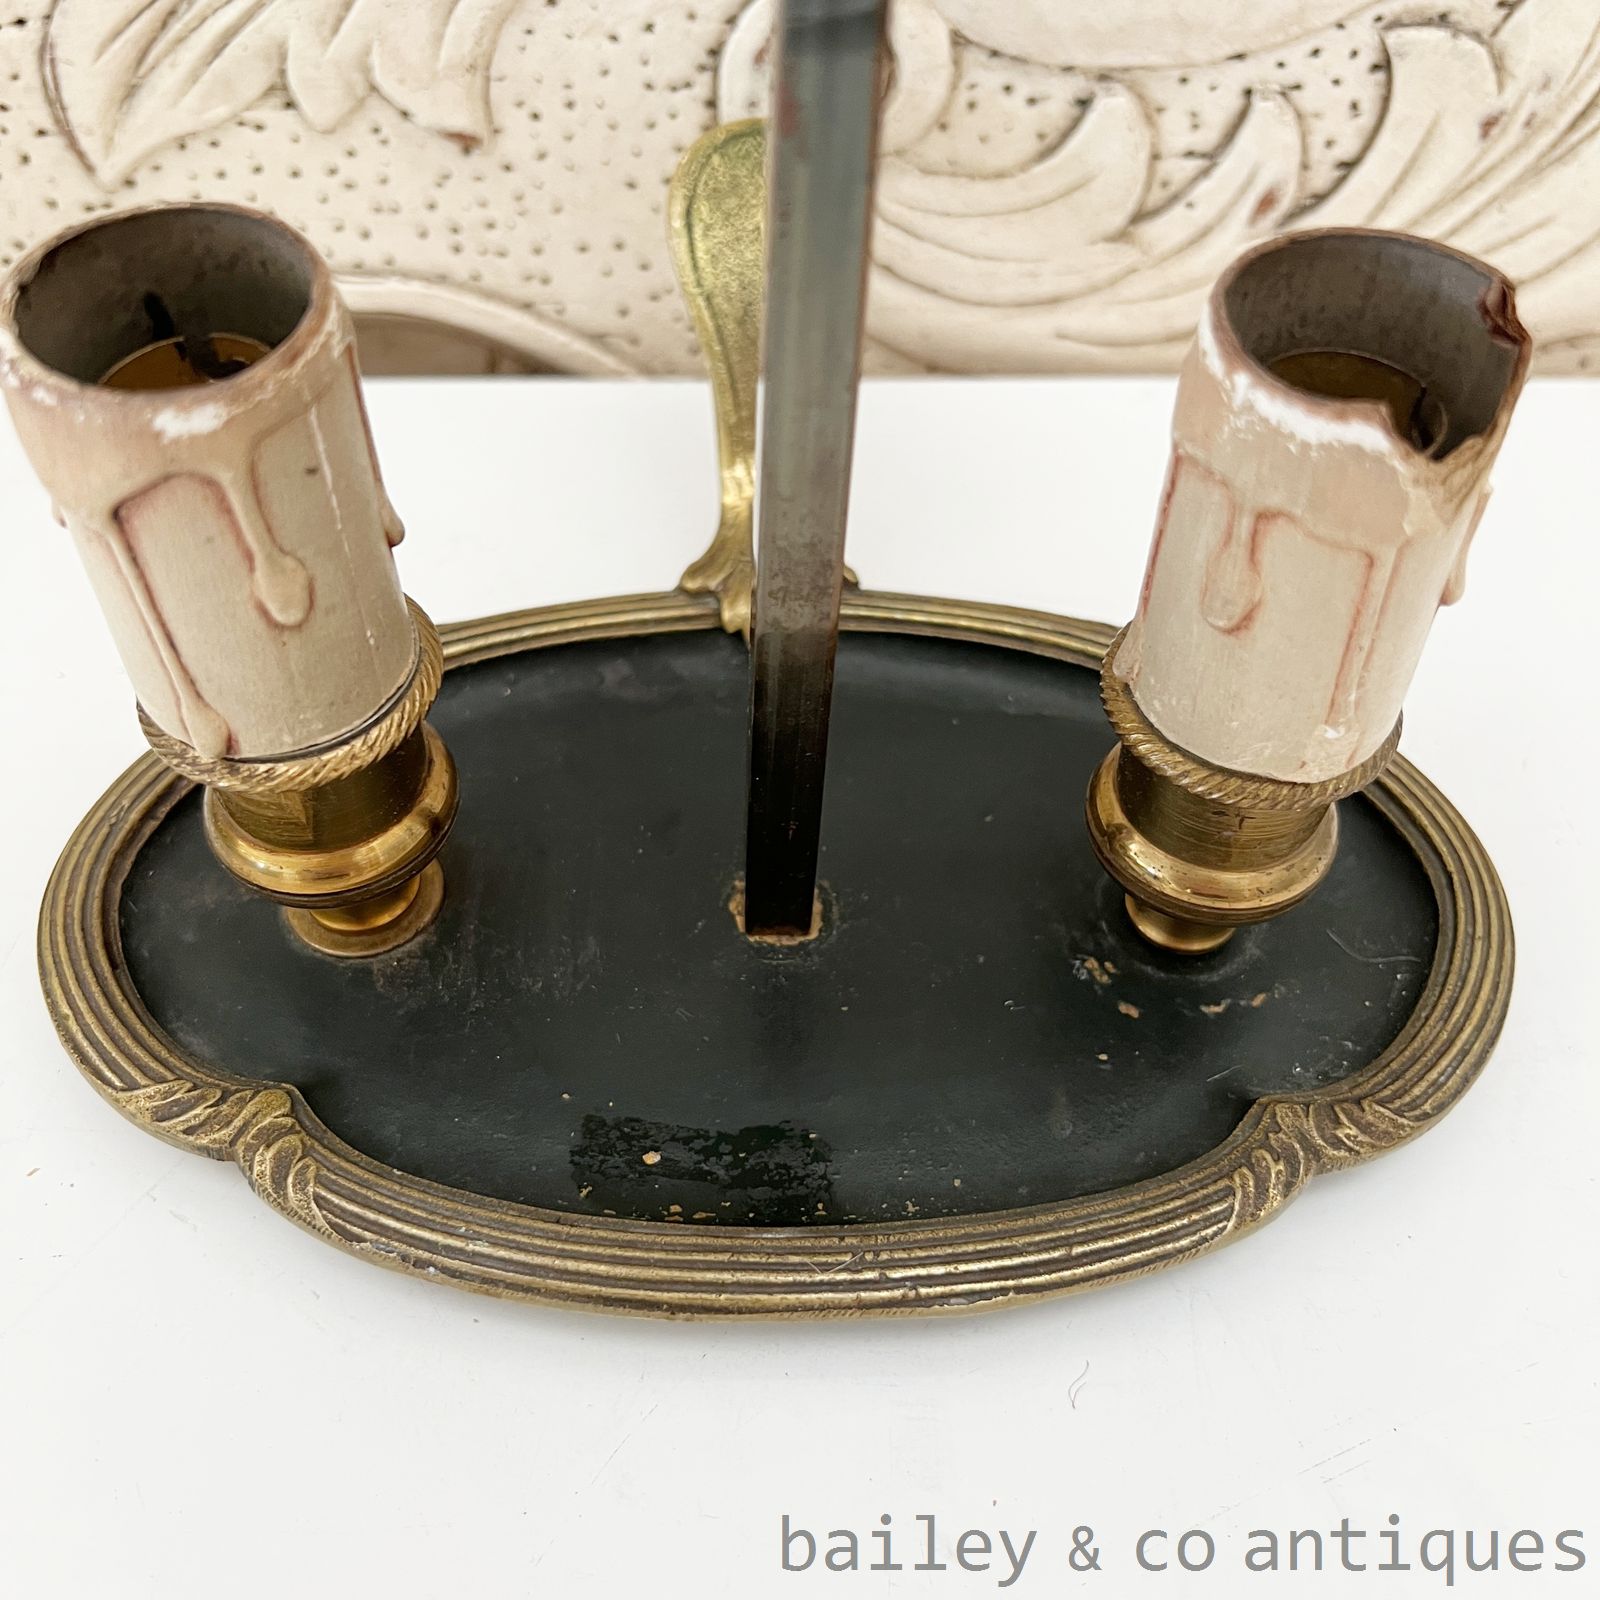 Vintage French Bouillotte Parisian Salon Lamps x2 selling as pair  - FR690-703  detail 24